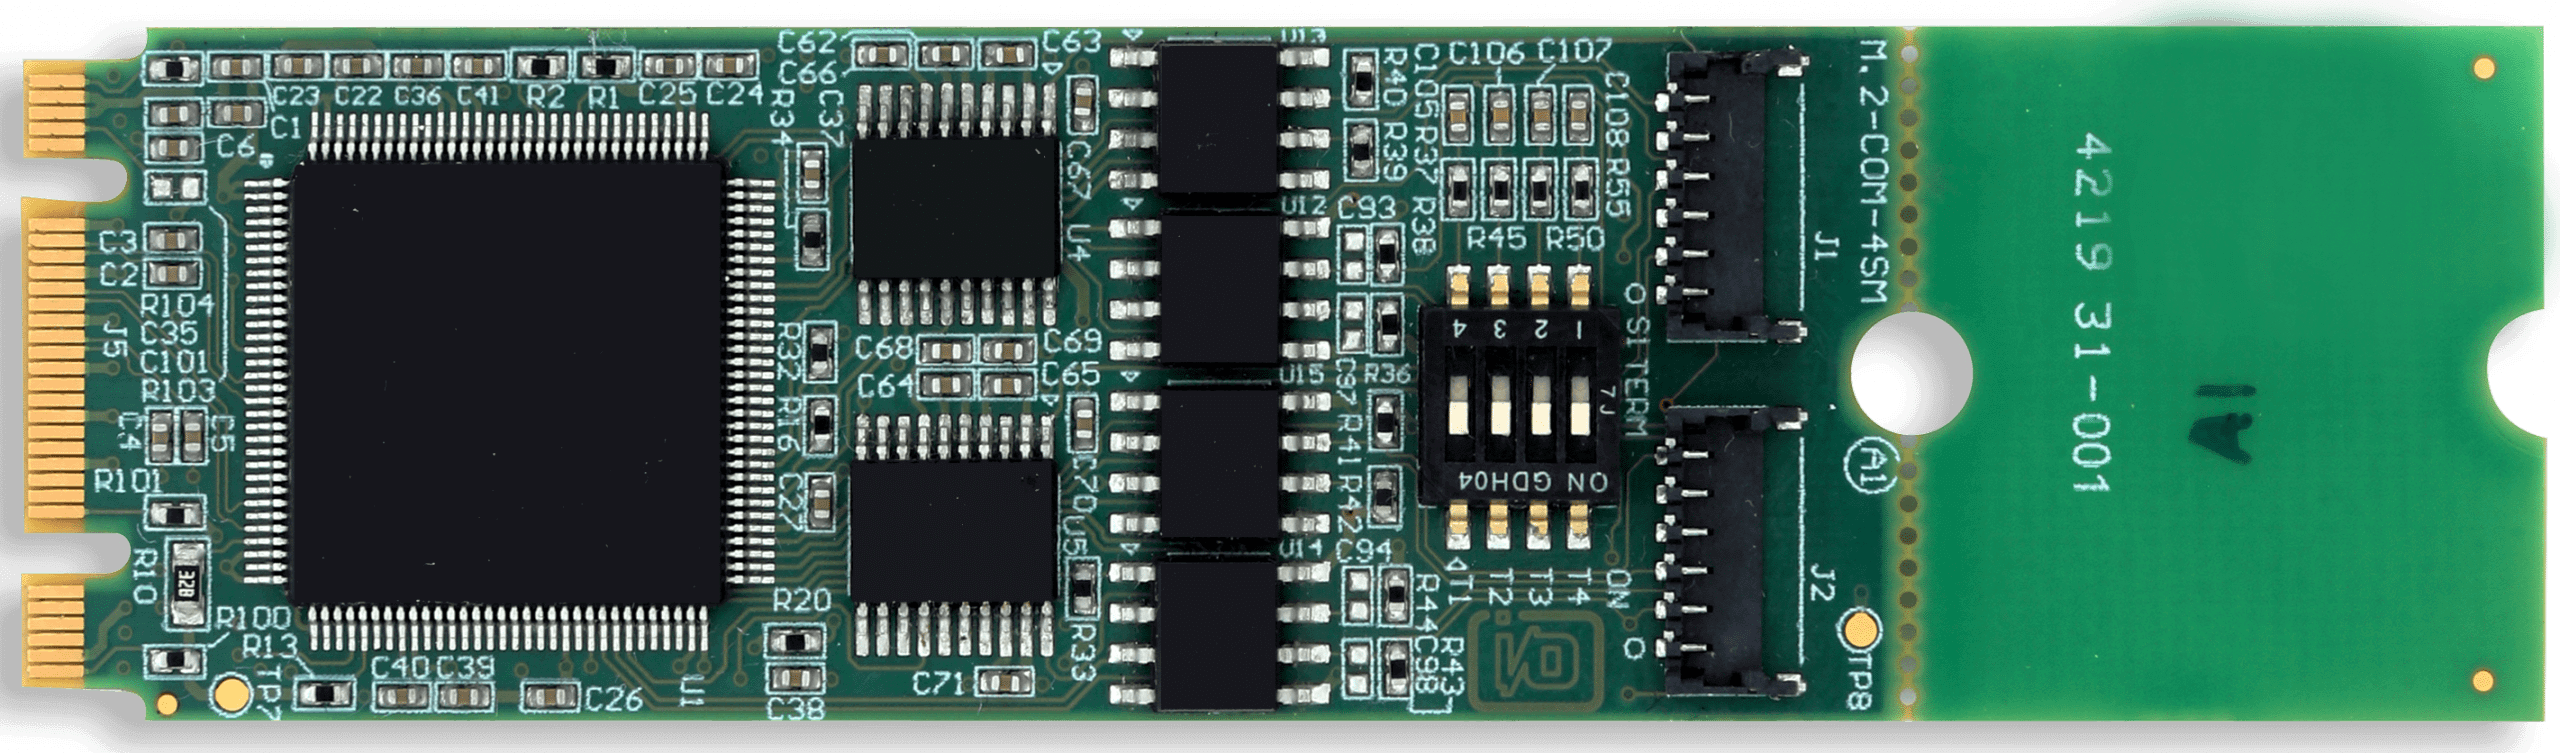 Measurement Computing PCI-COM232/4 Card 